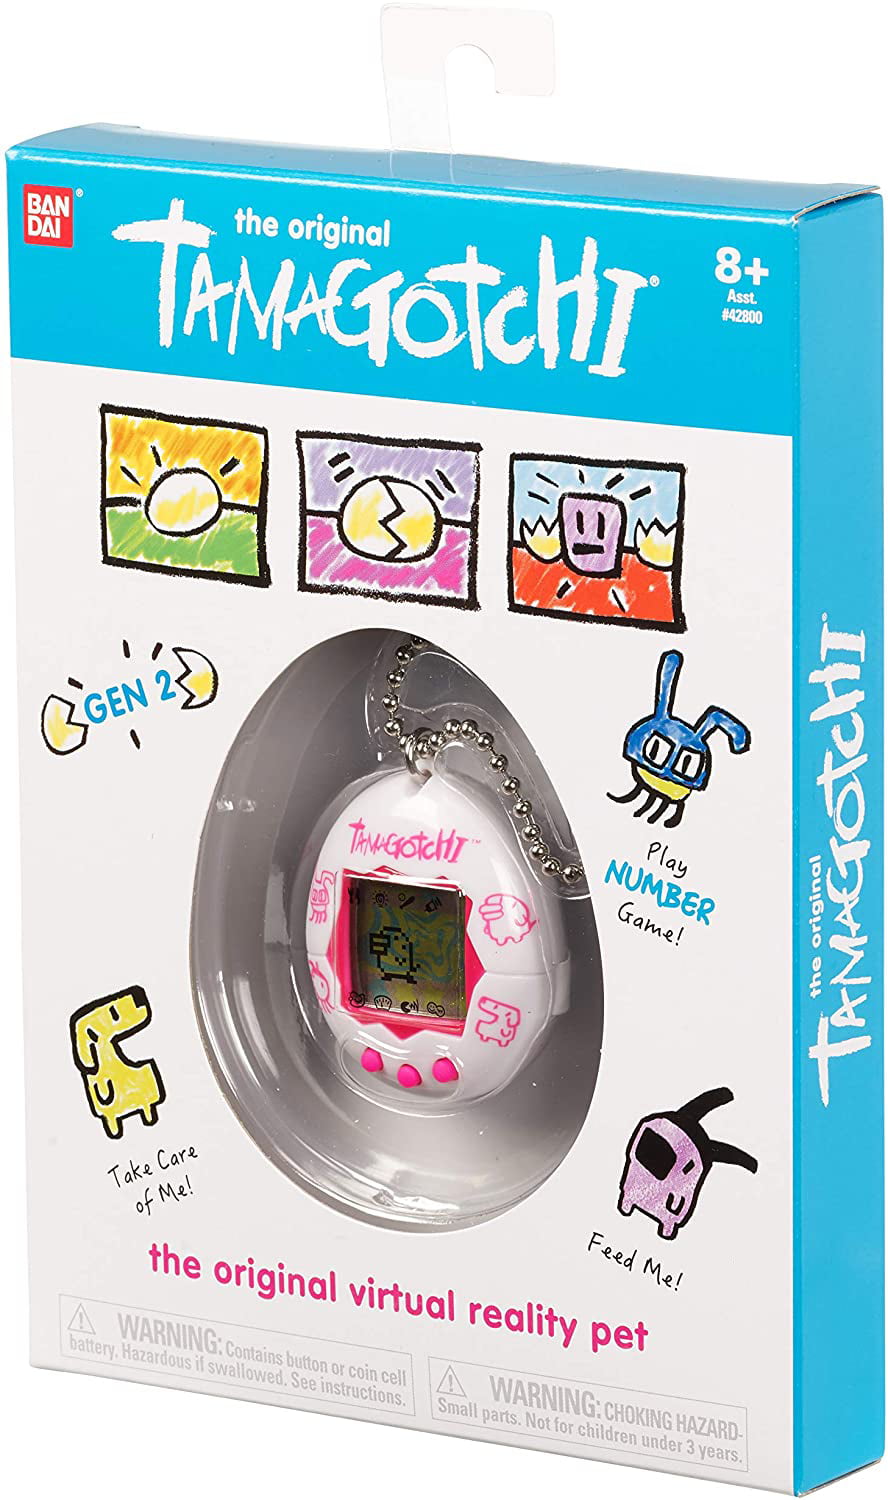 Tamagotchi Original Digital Electronic Virtual Pet - Heart (White)